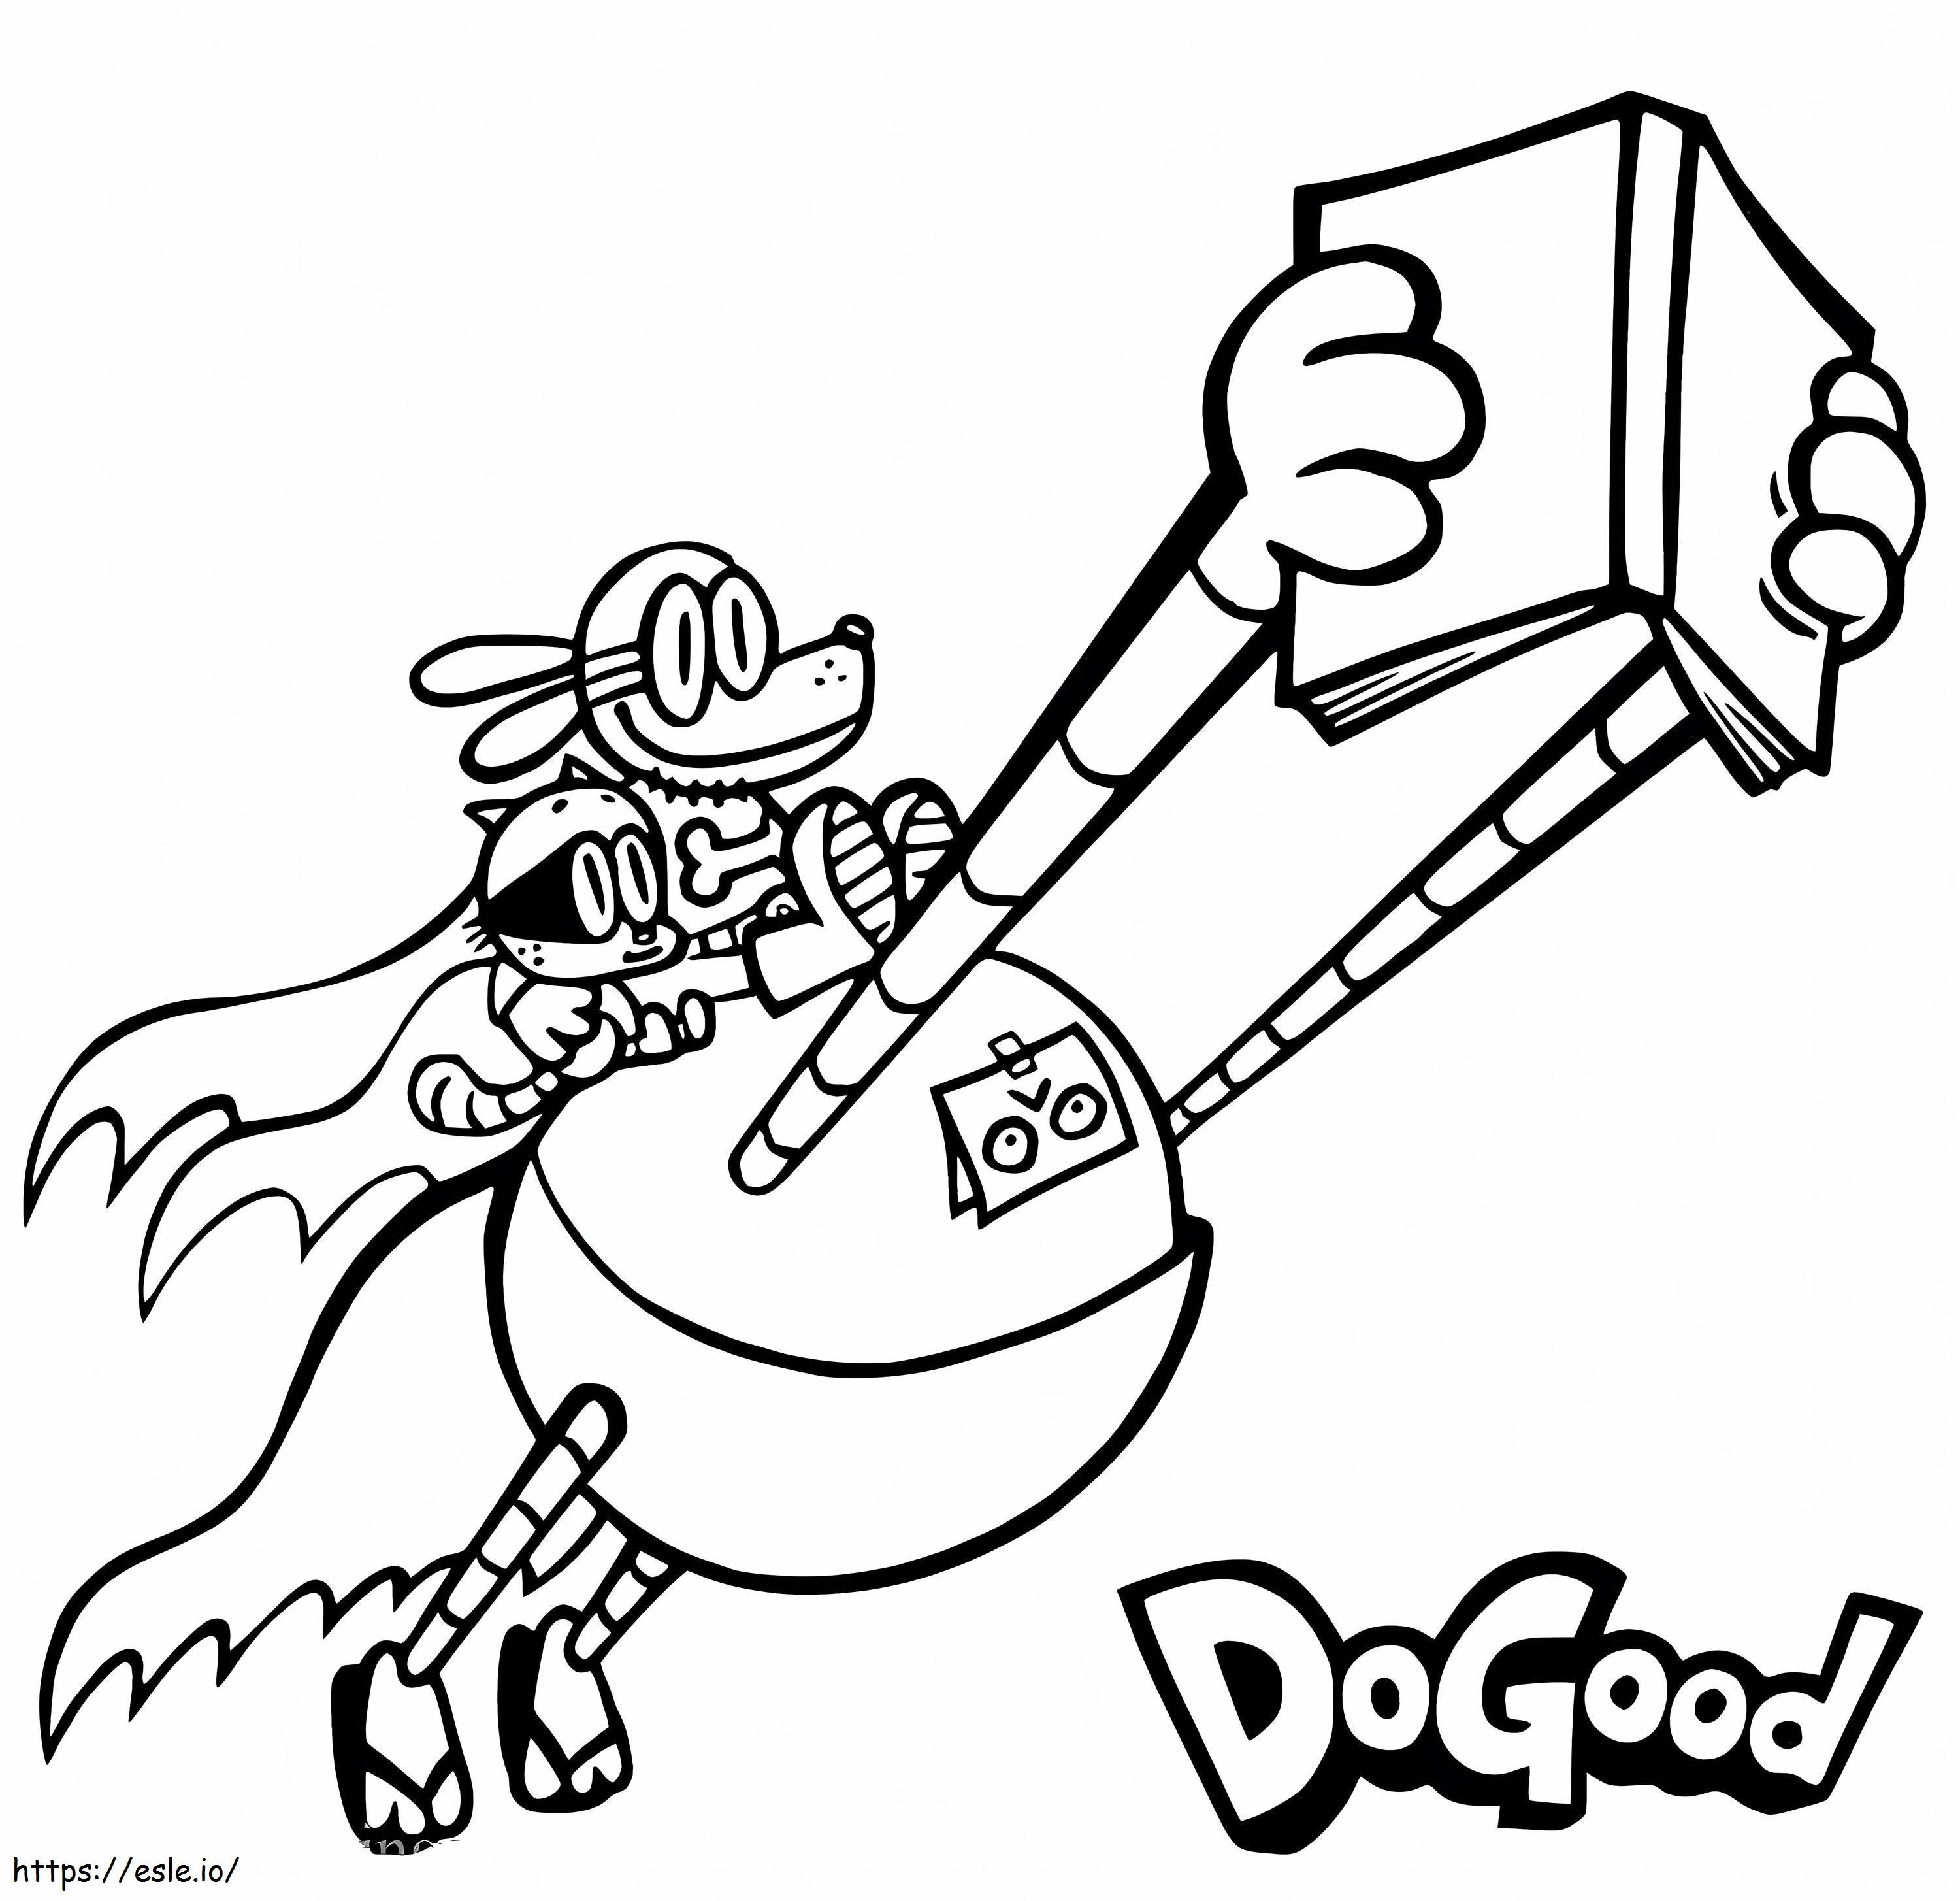 Dog Man Flight coloring page